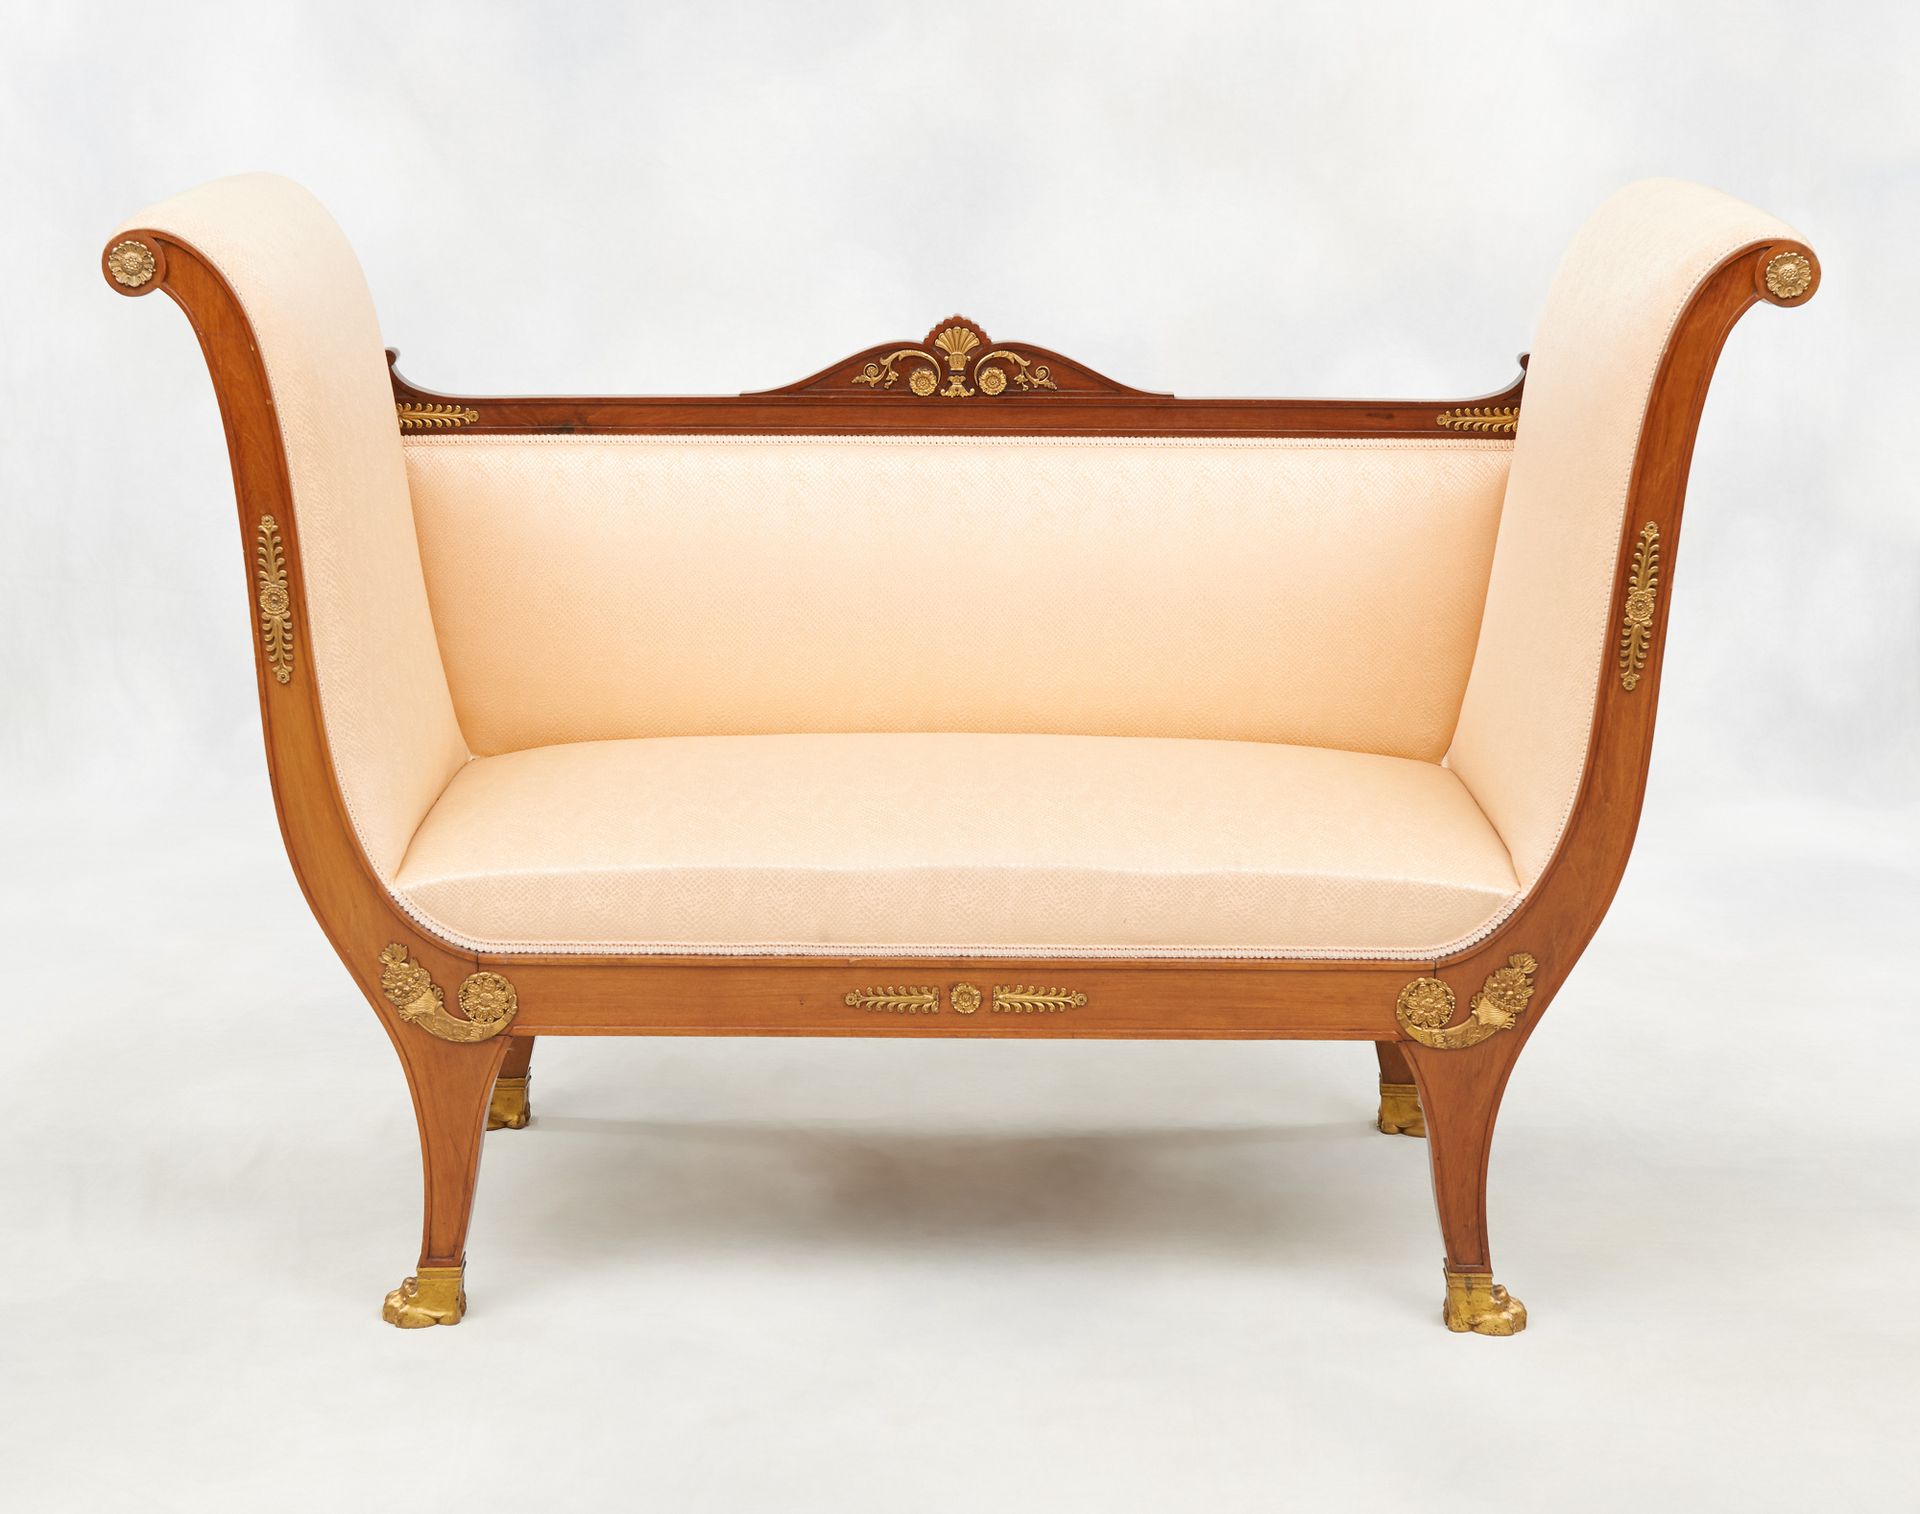 De style Empire. 家具：桃花心木双座沙发，上面覆盖着织物，有镀金的青铜亮点。

尺寸：高：100 W：147 D：57 cm。